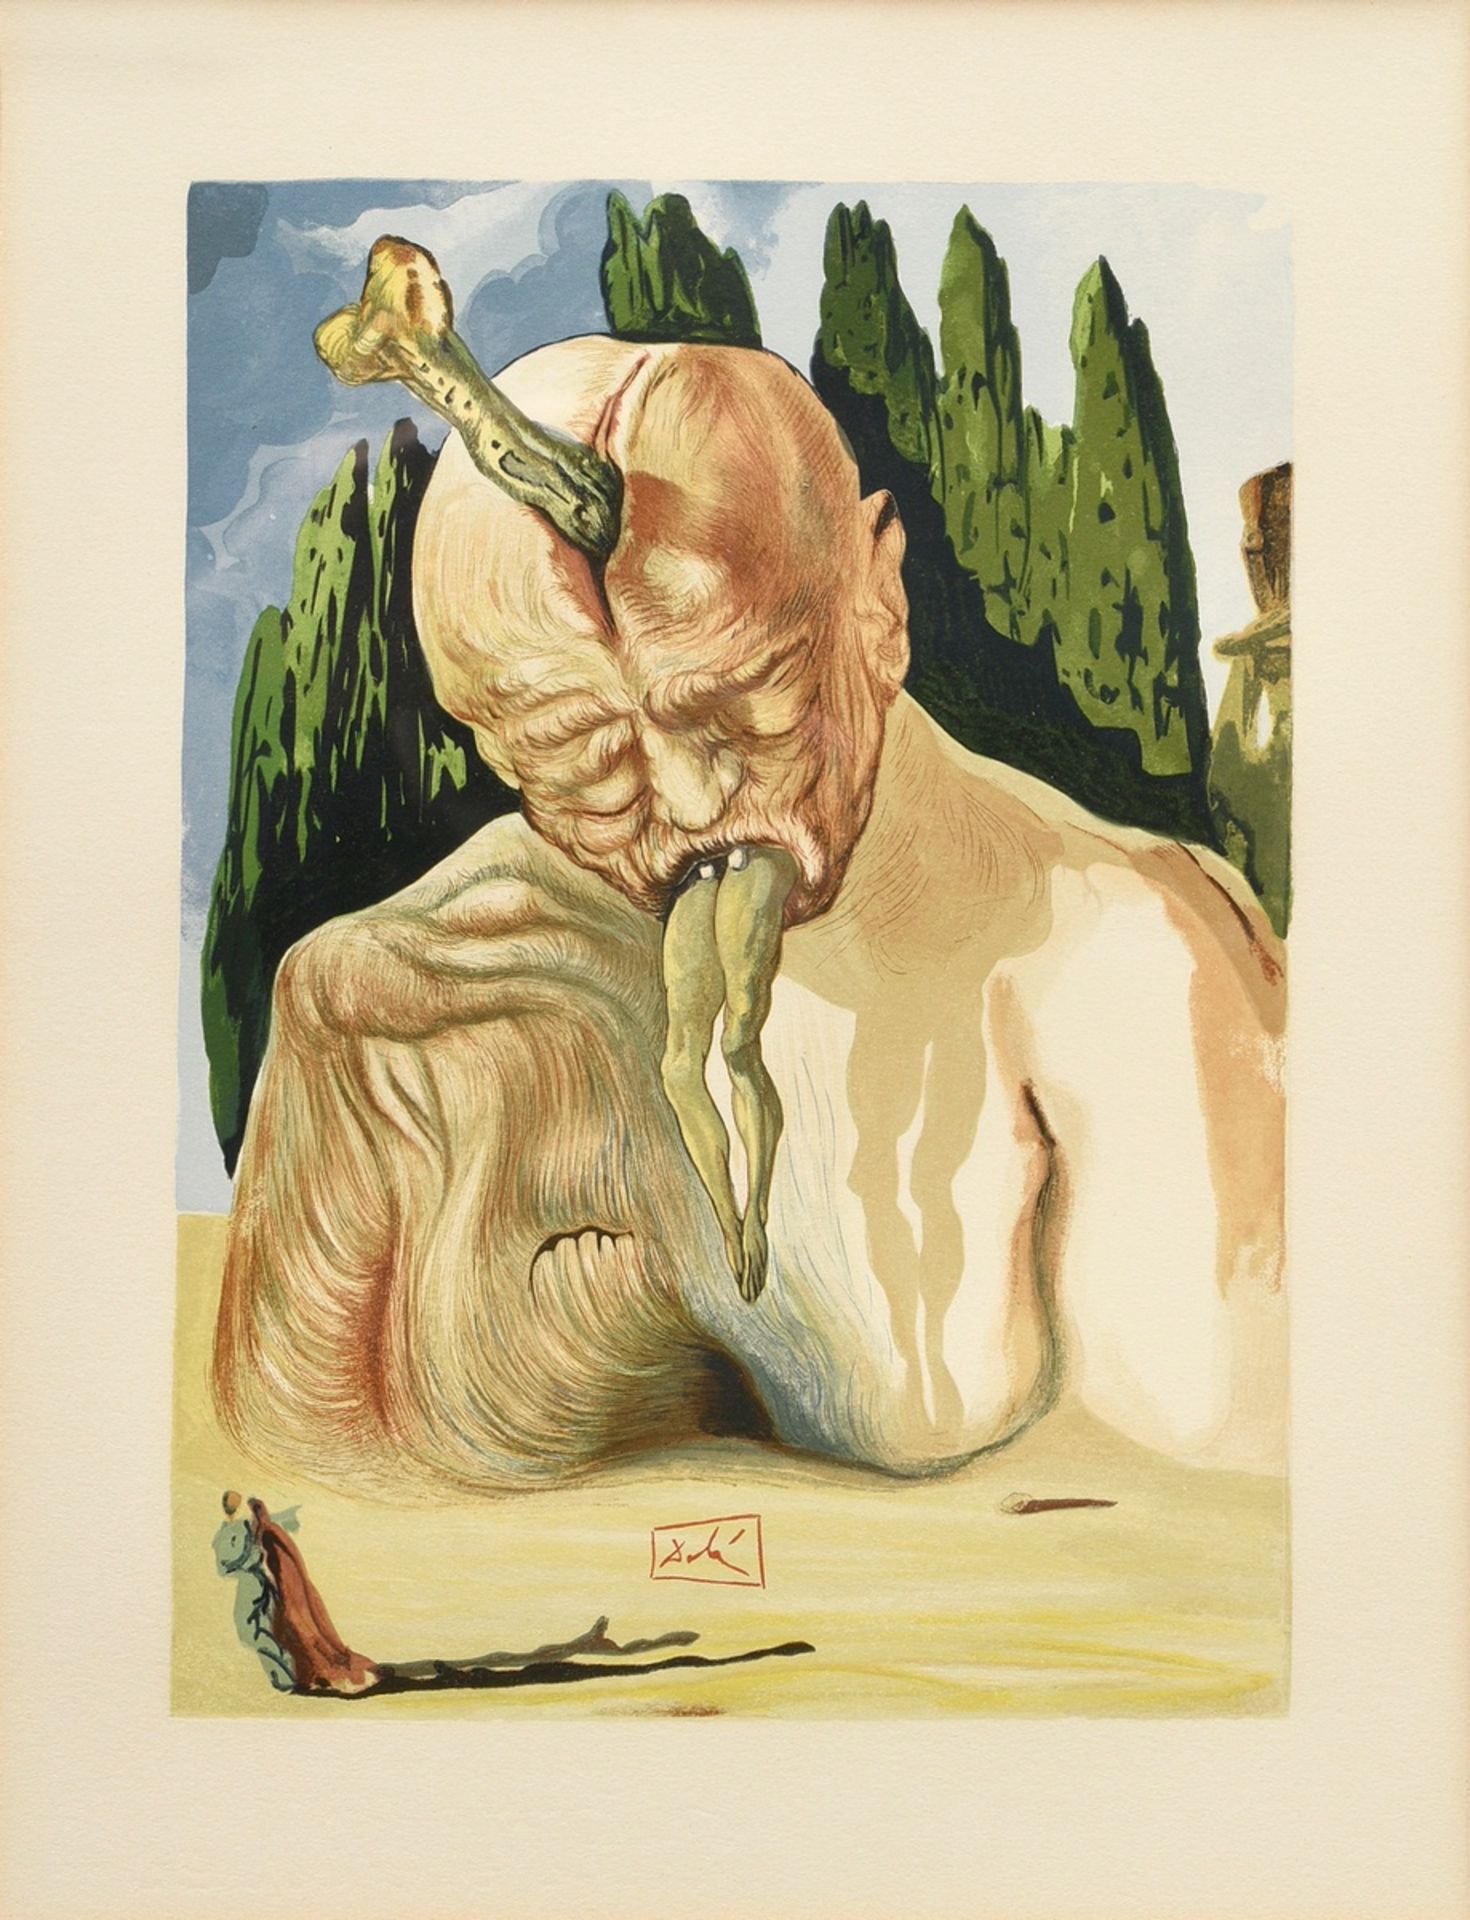 Dalí, Salvador (1904-1989) "Der logische Teufel" (Hölle - 27. Gesang), aus Dante Alighieri "Die Göt